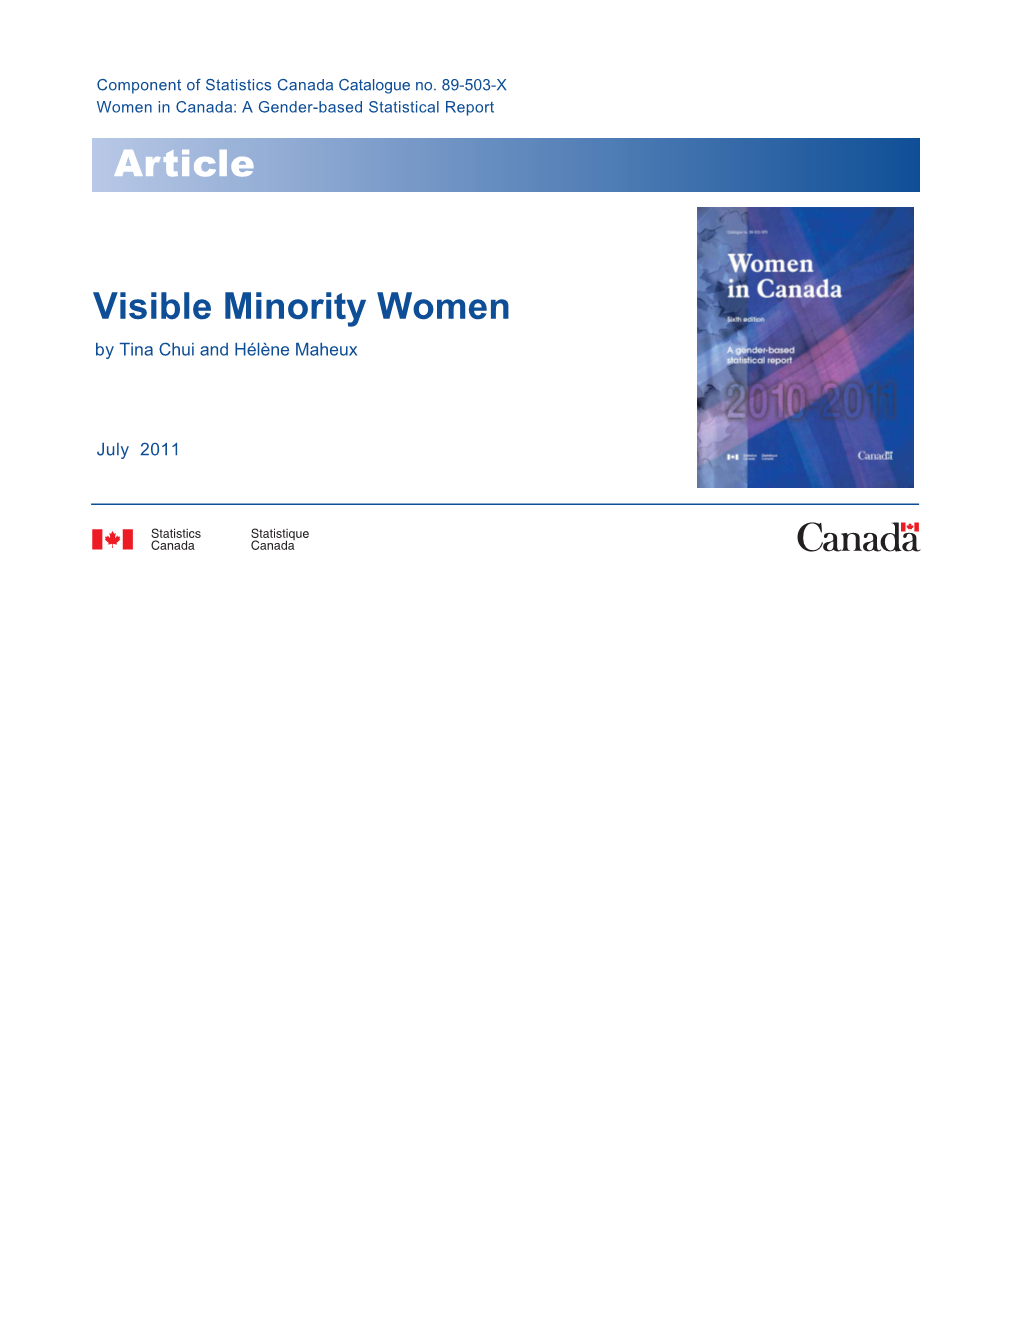 Visible Minority Women by Tina Chui and Hélène Maheux